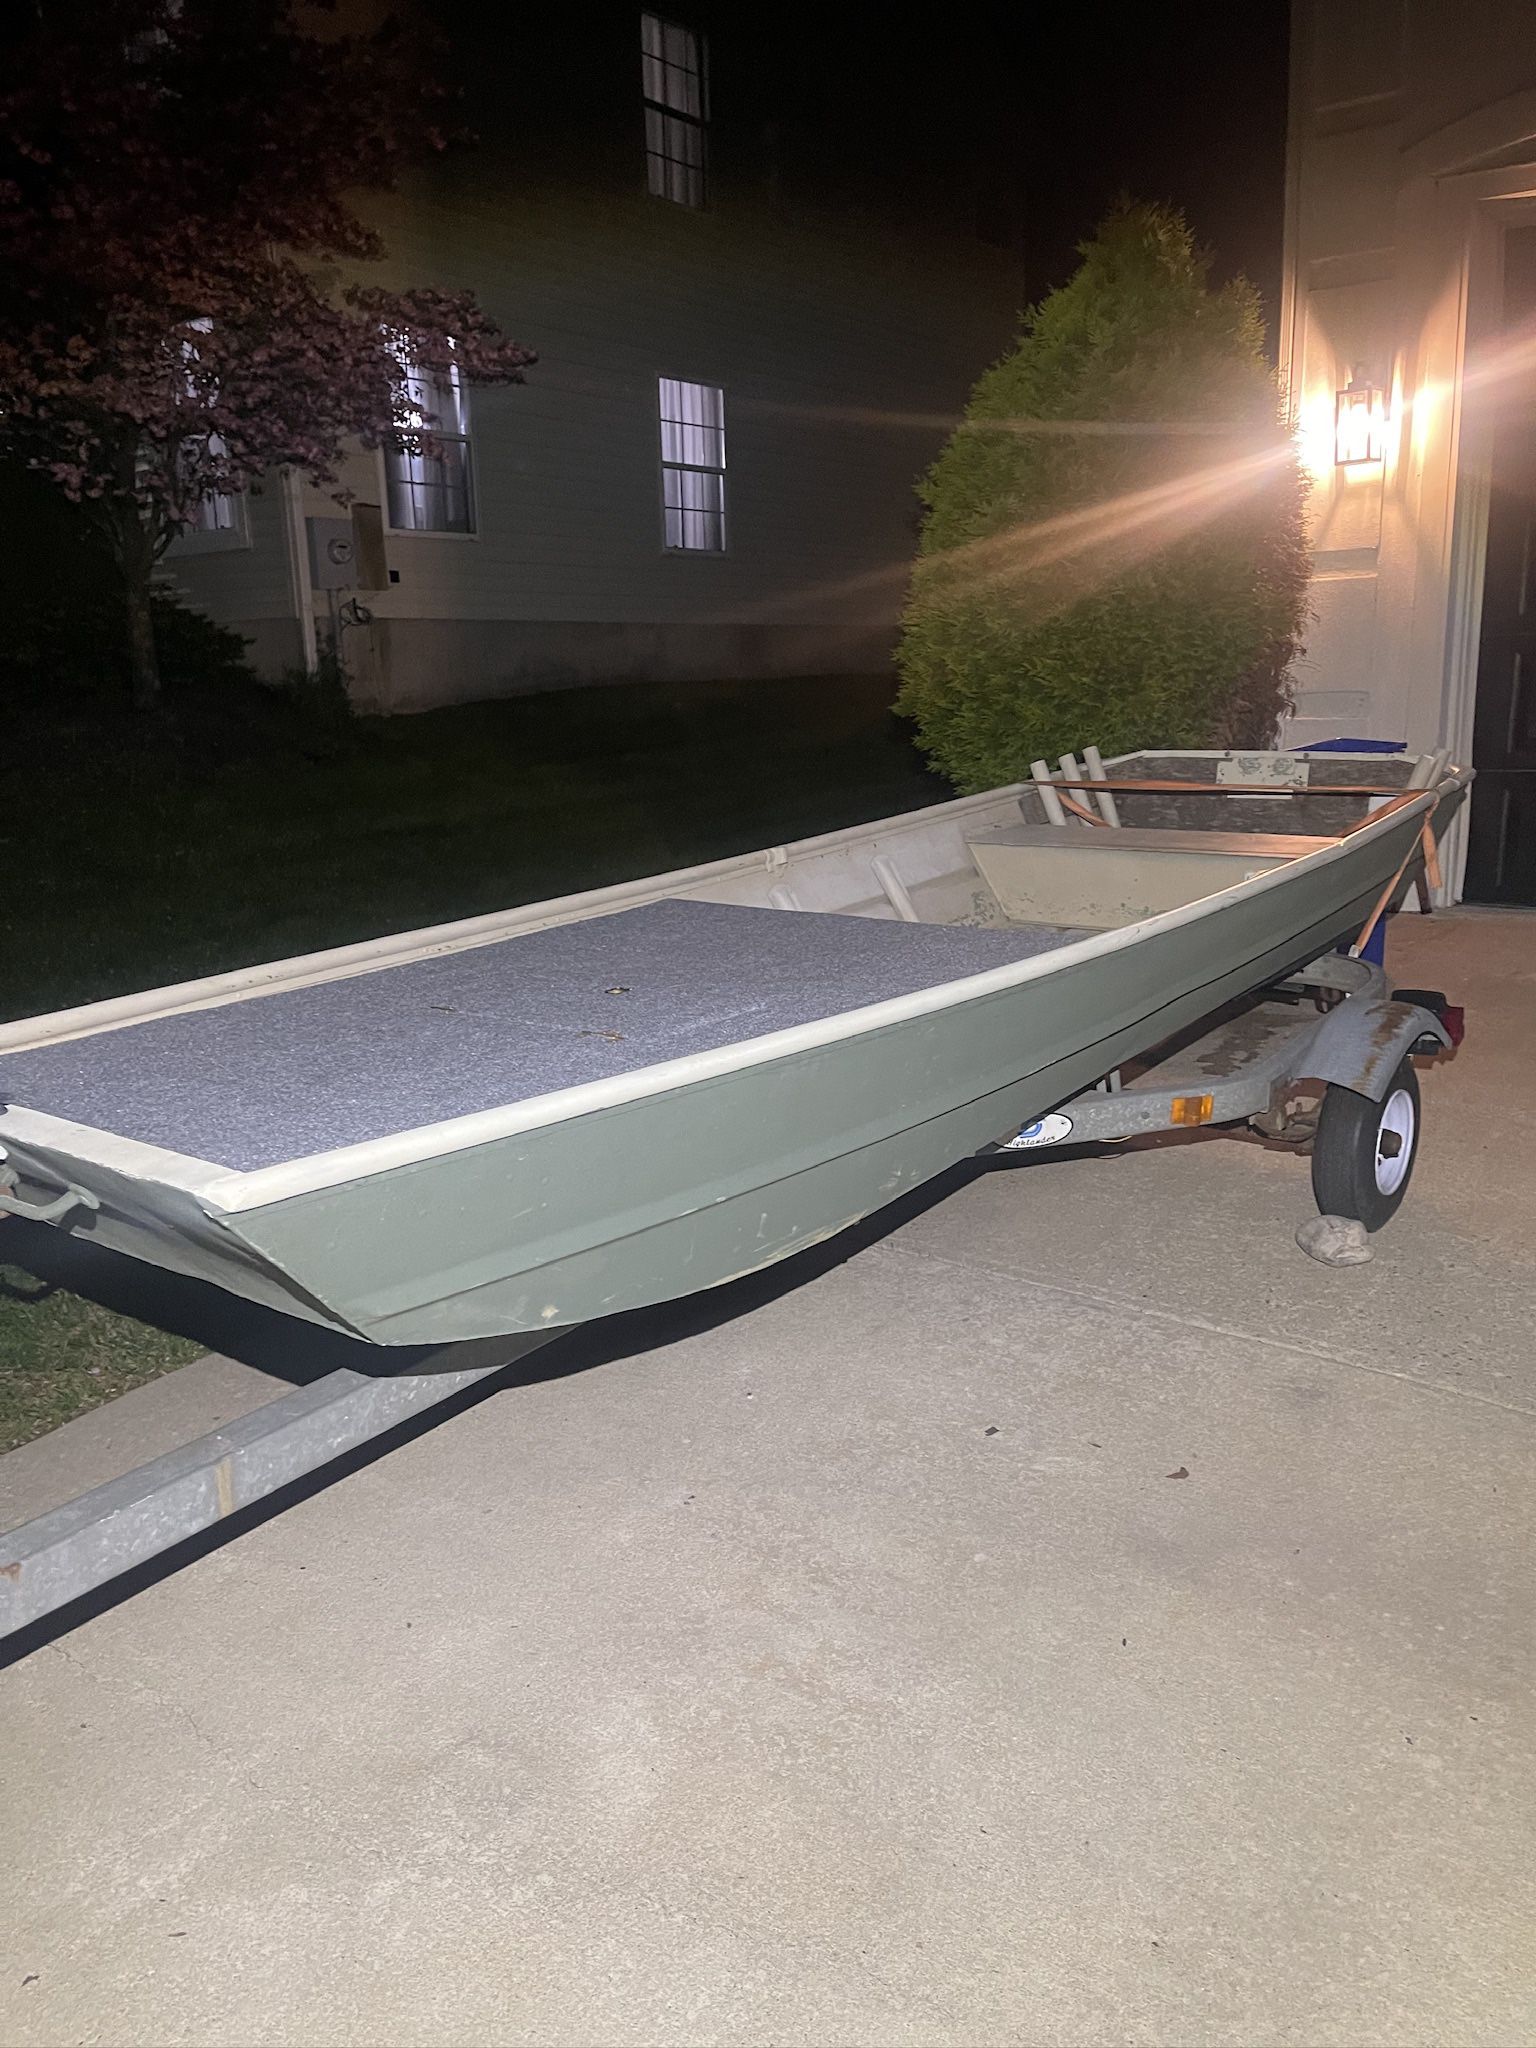 12’ flat bottom jon boat and trailer 